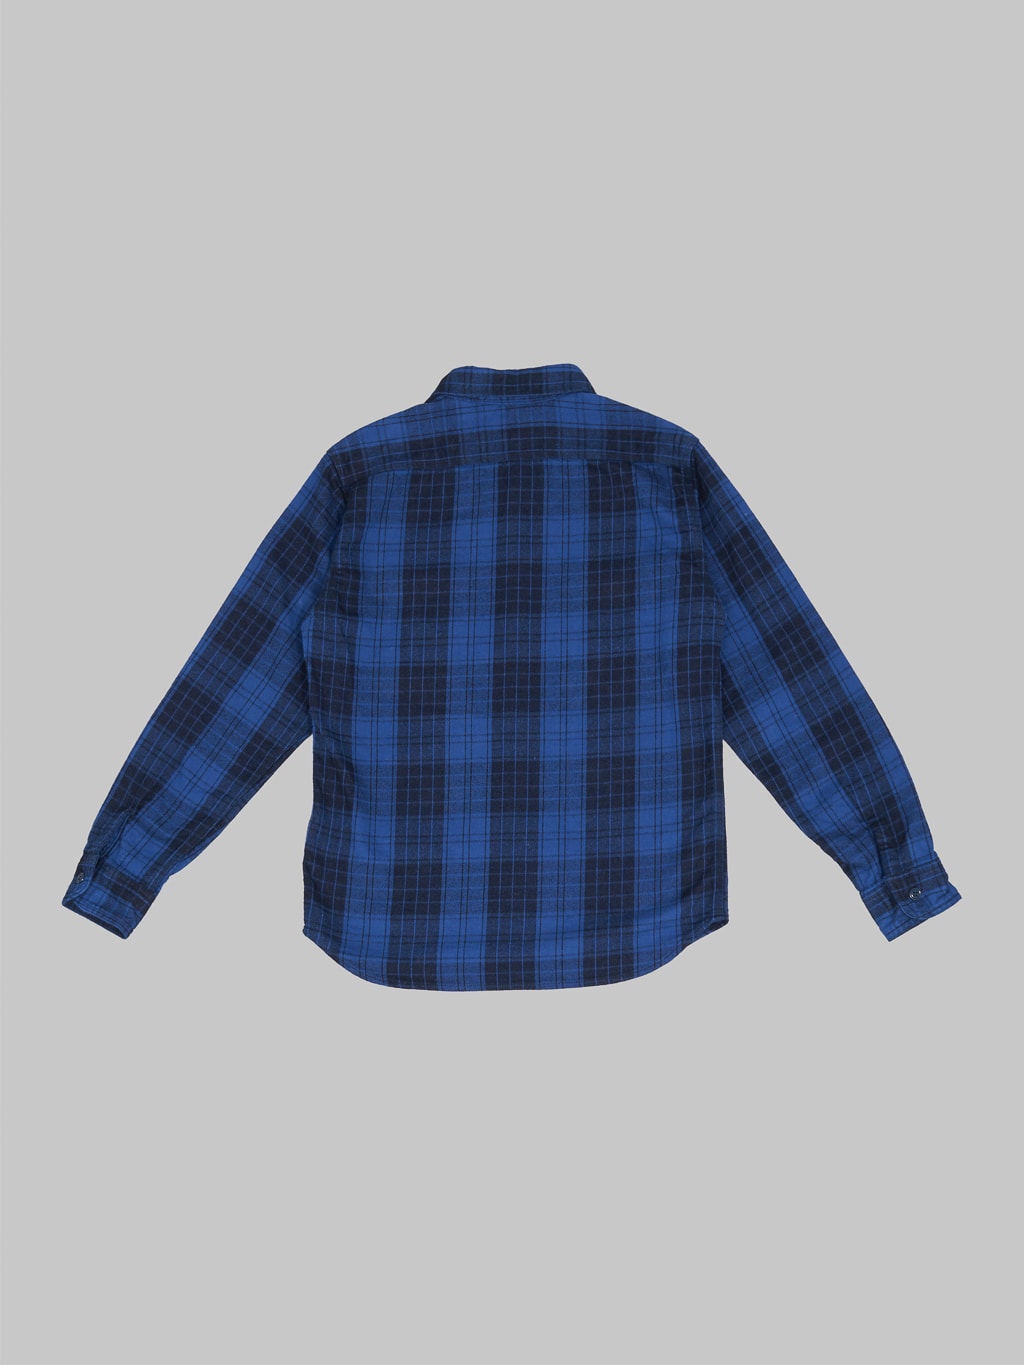 Momotaro original indigo twill check flannel shirt back view